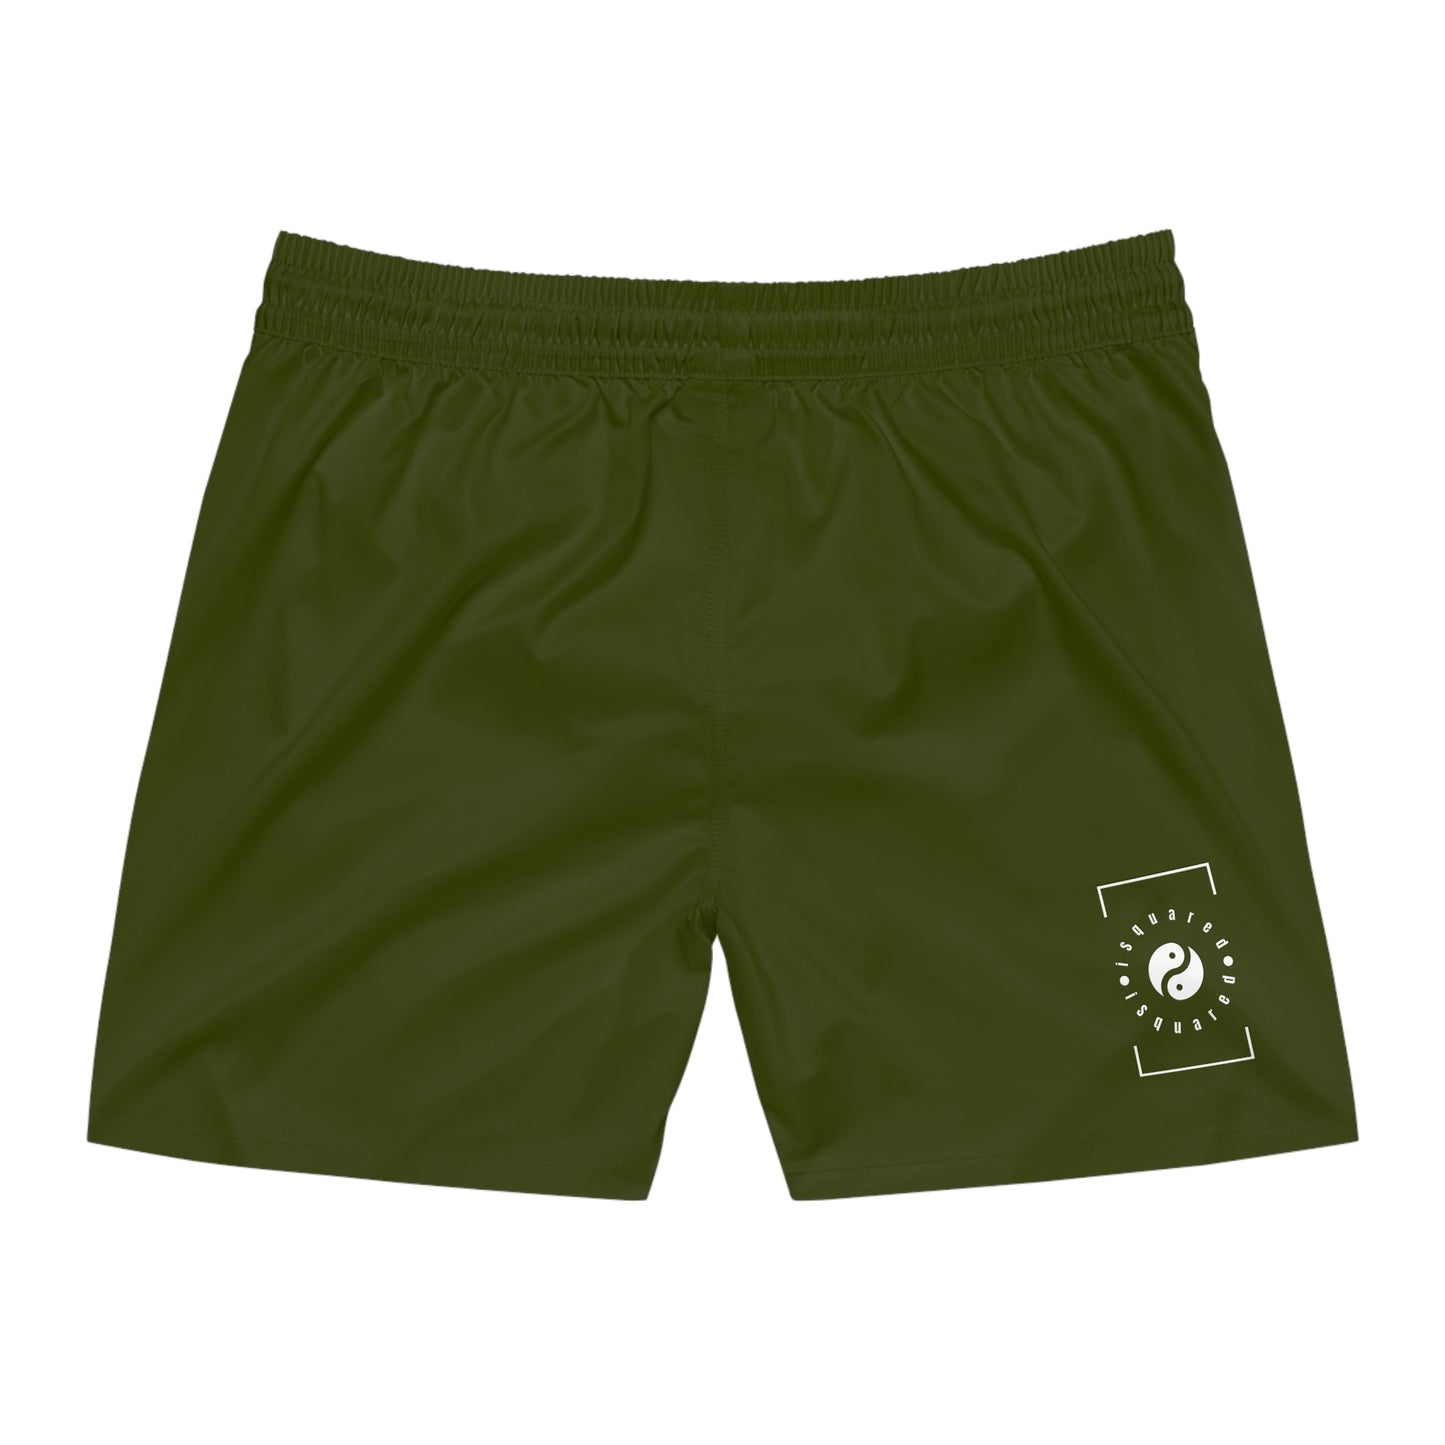 Camo Green - Swim Shorts (Solid Color) for Men